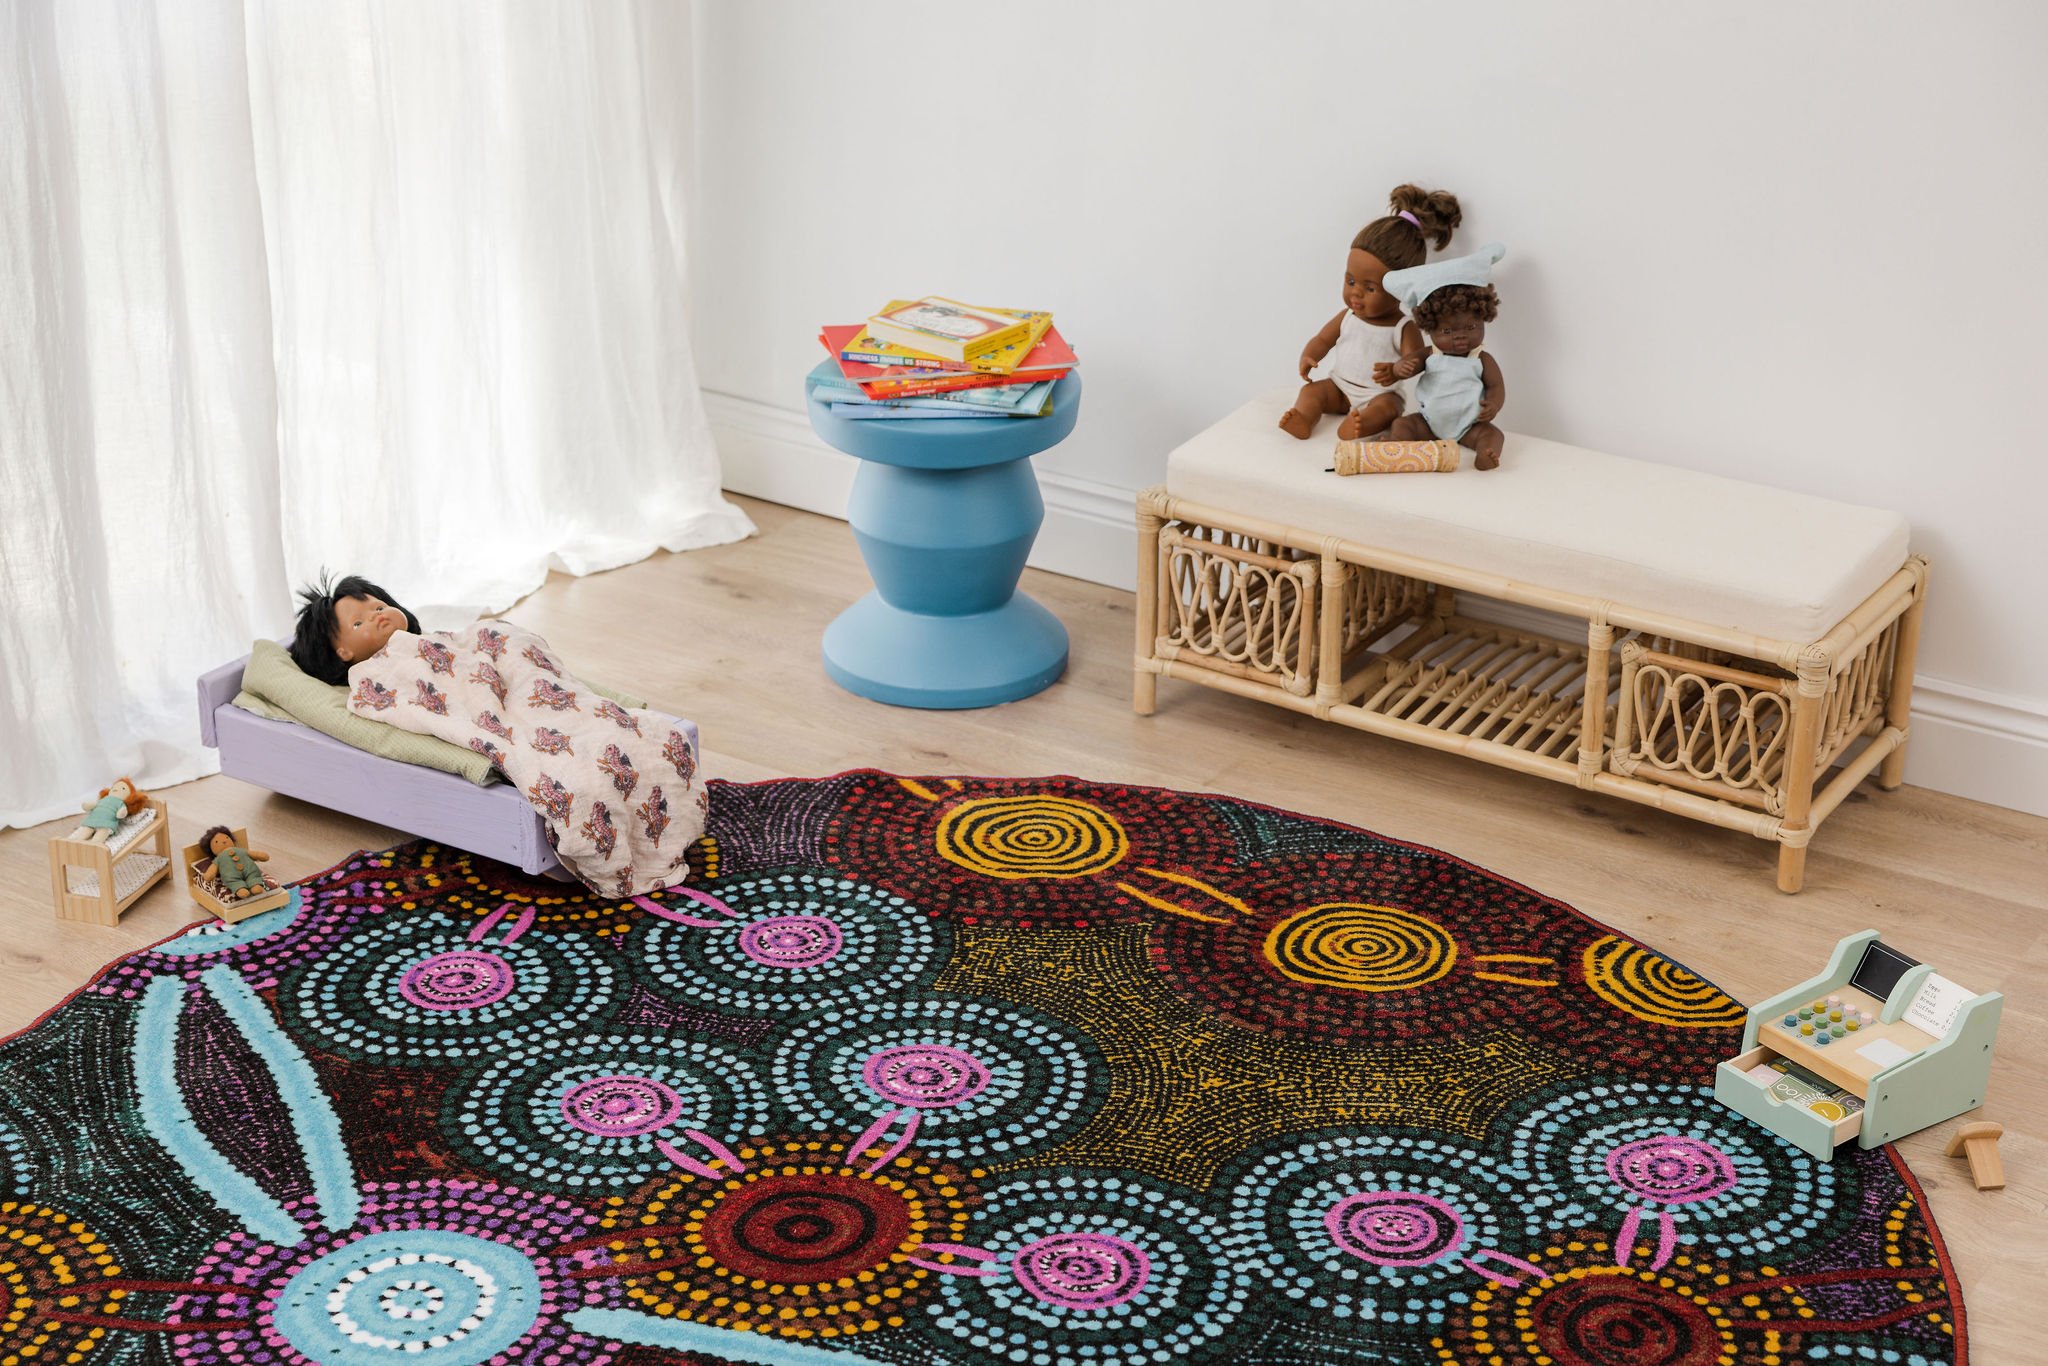 Tanika-Blair-Photography-Emro-Designs-Daycare-Aboriginal-Floor-Rugs-41.jpg